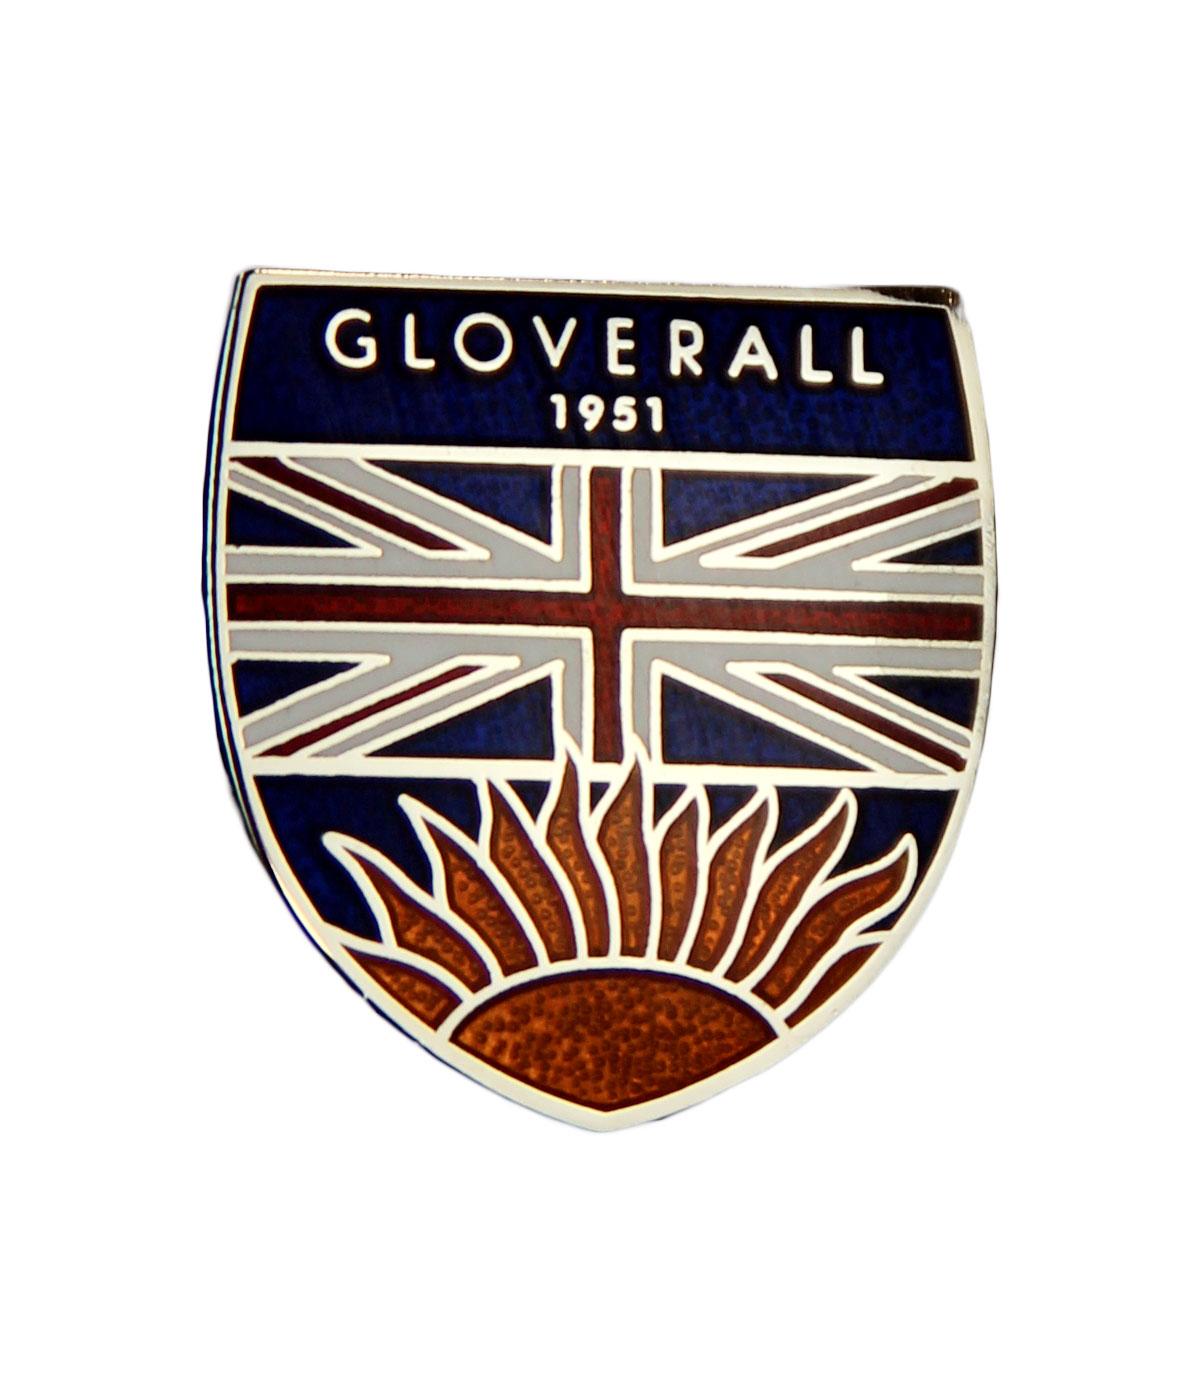 GLOVERALL Retro Union Jack Racing Shield Pin Badge